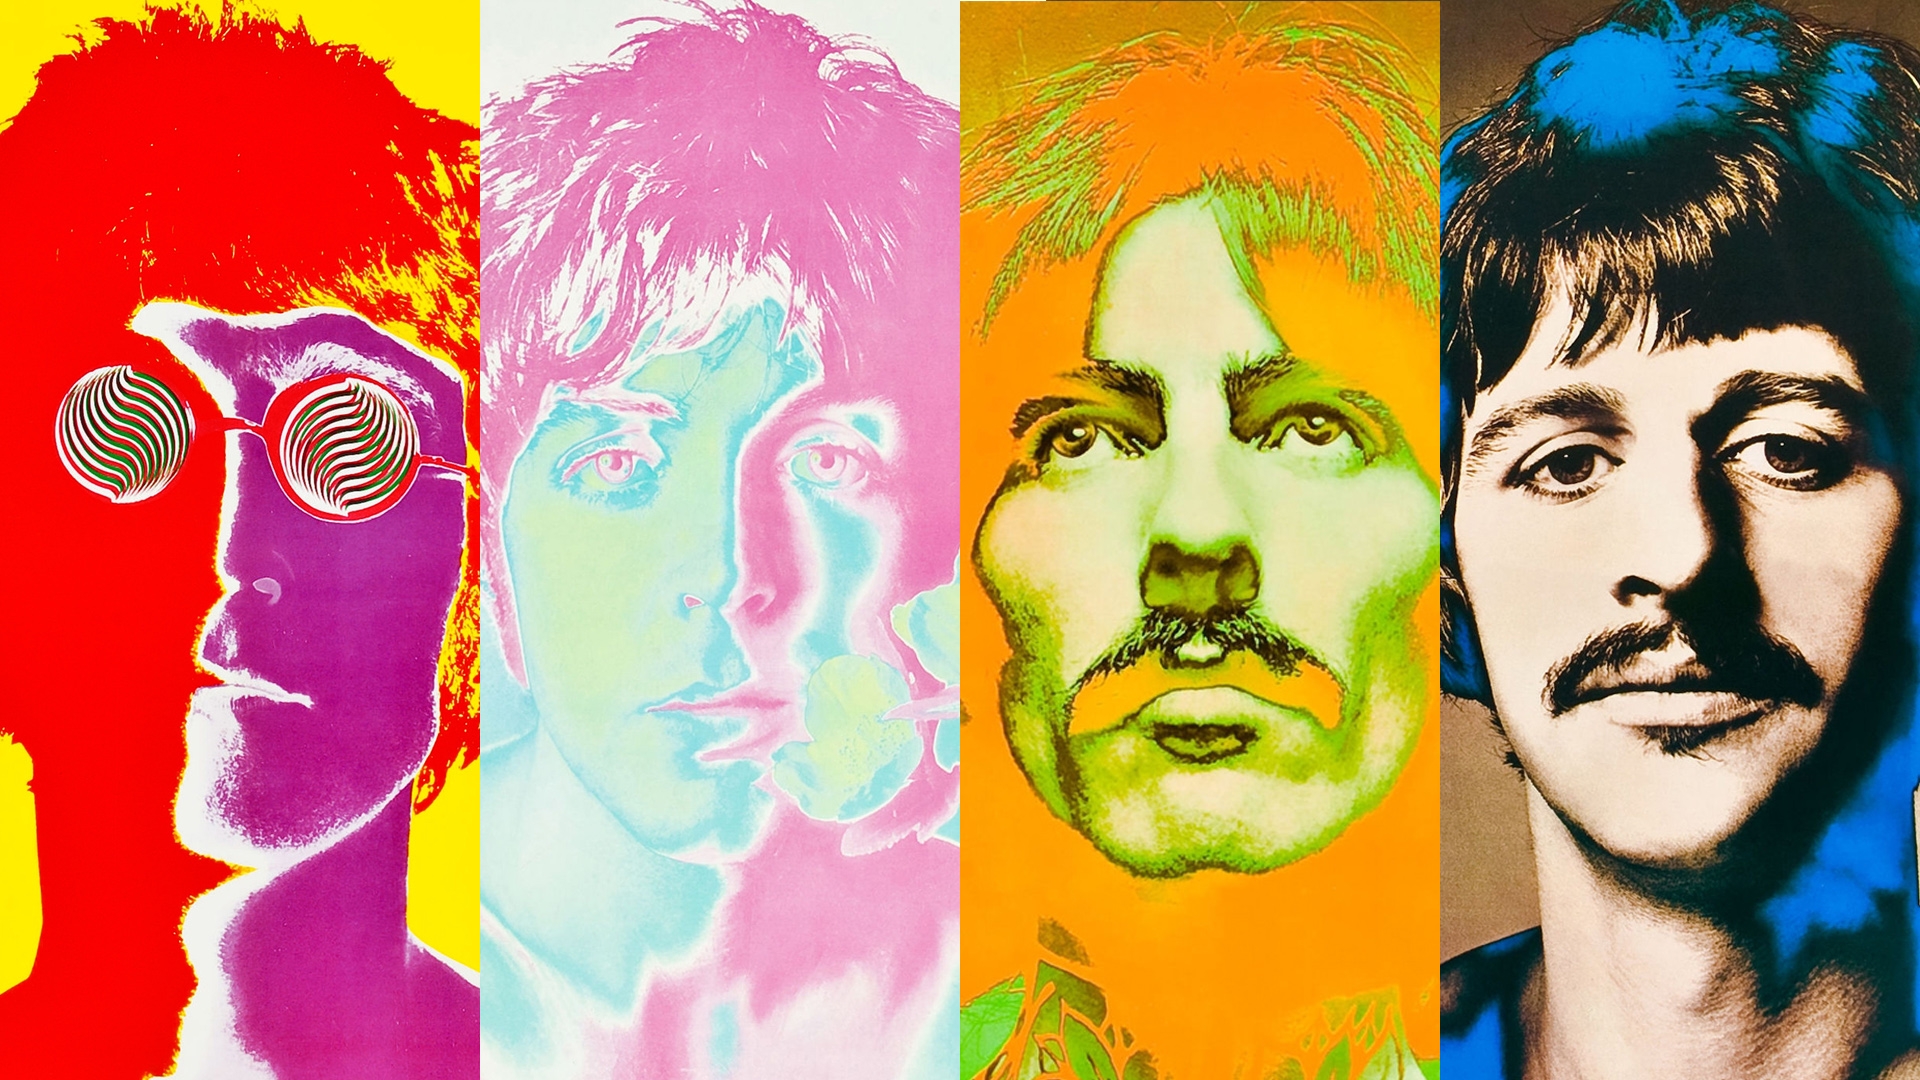 The Beatles Wallpaper